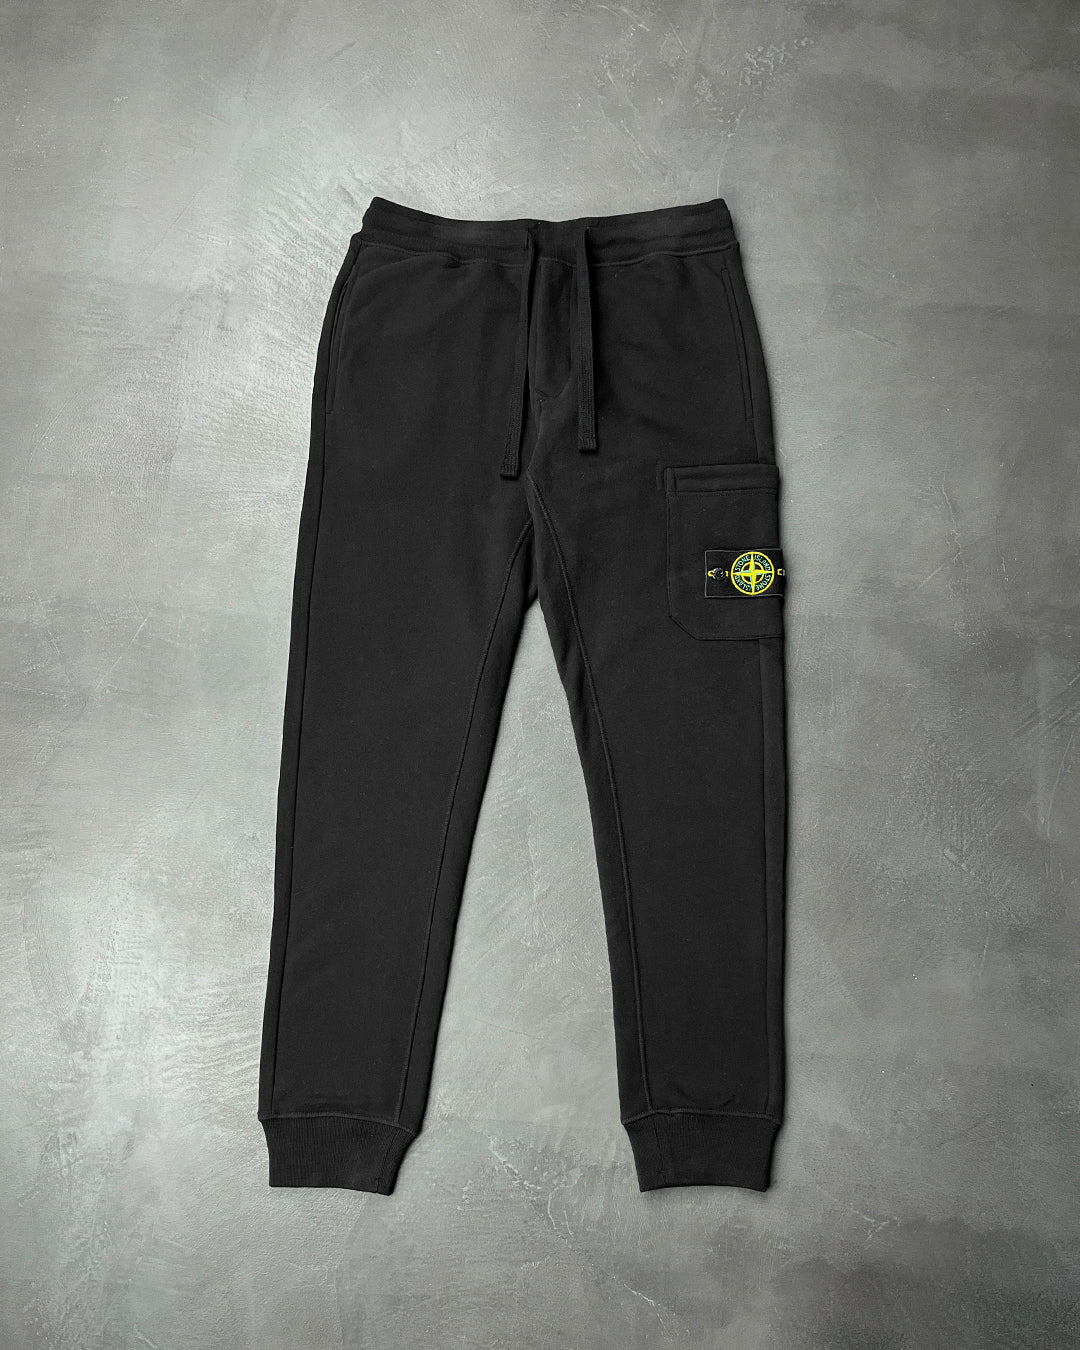 64520 Fleece Pants Black SI0144-BK